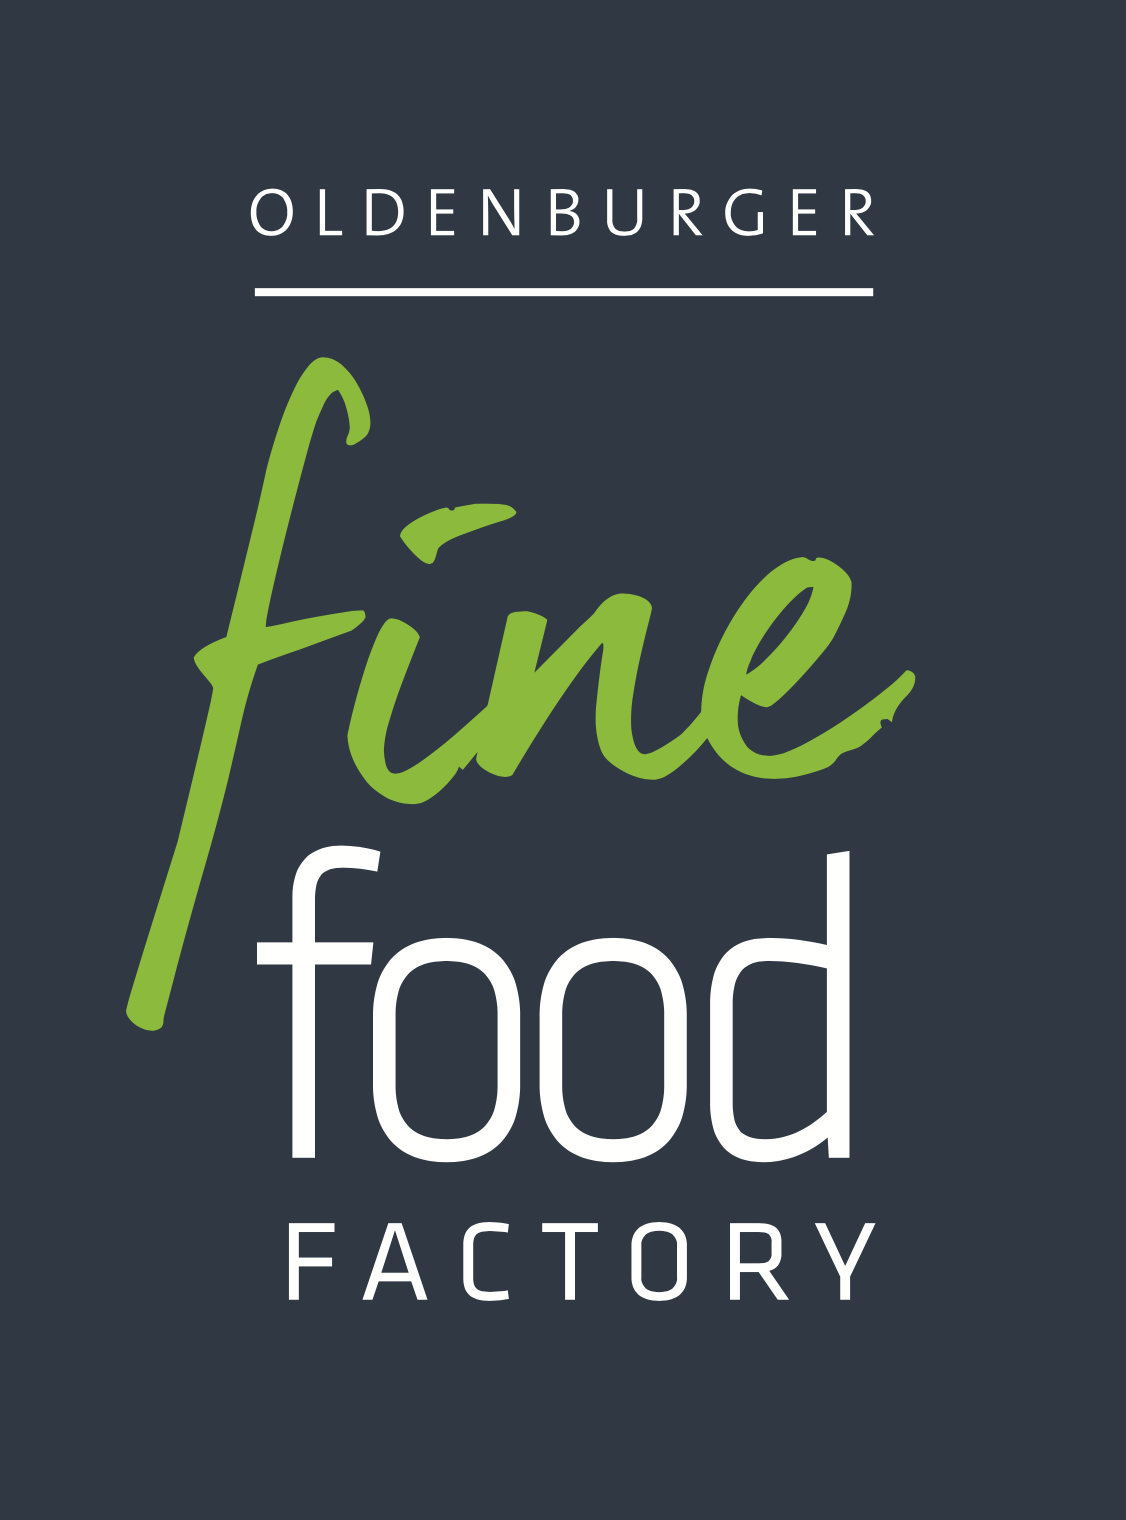 Oldenburger finefood Factory